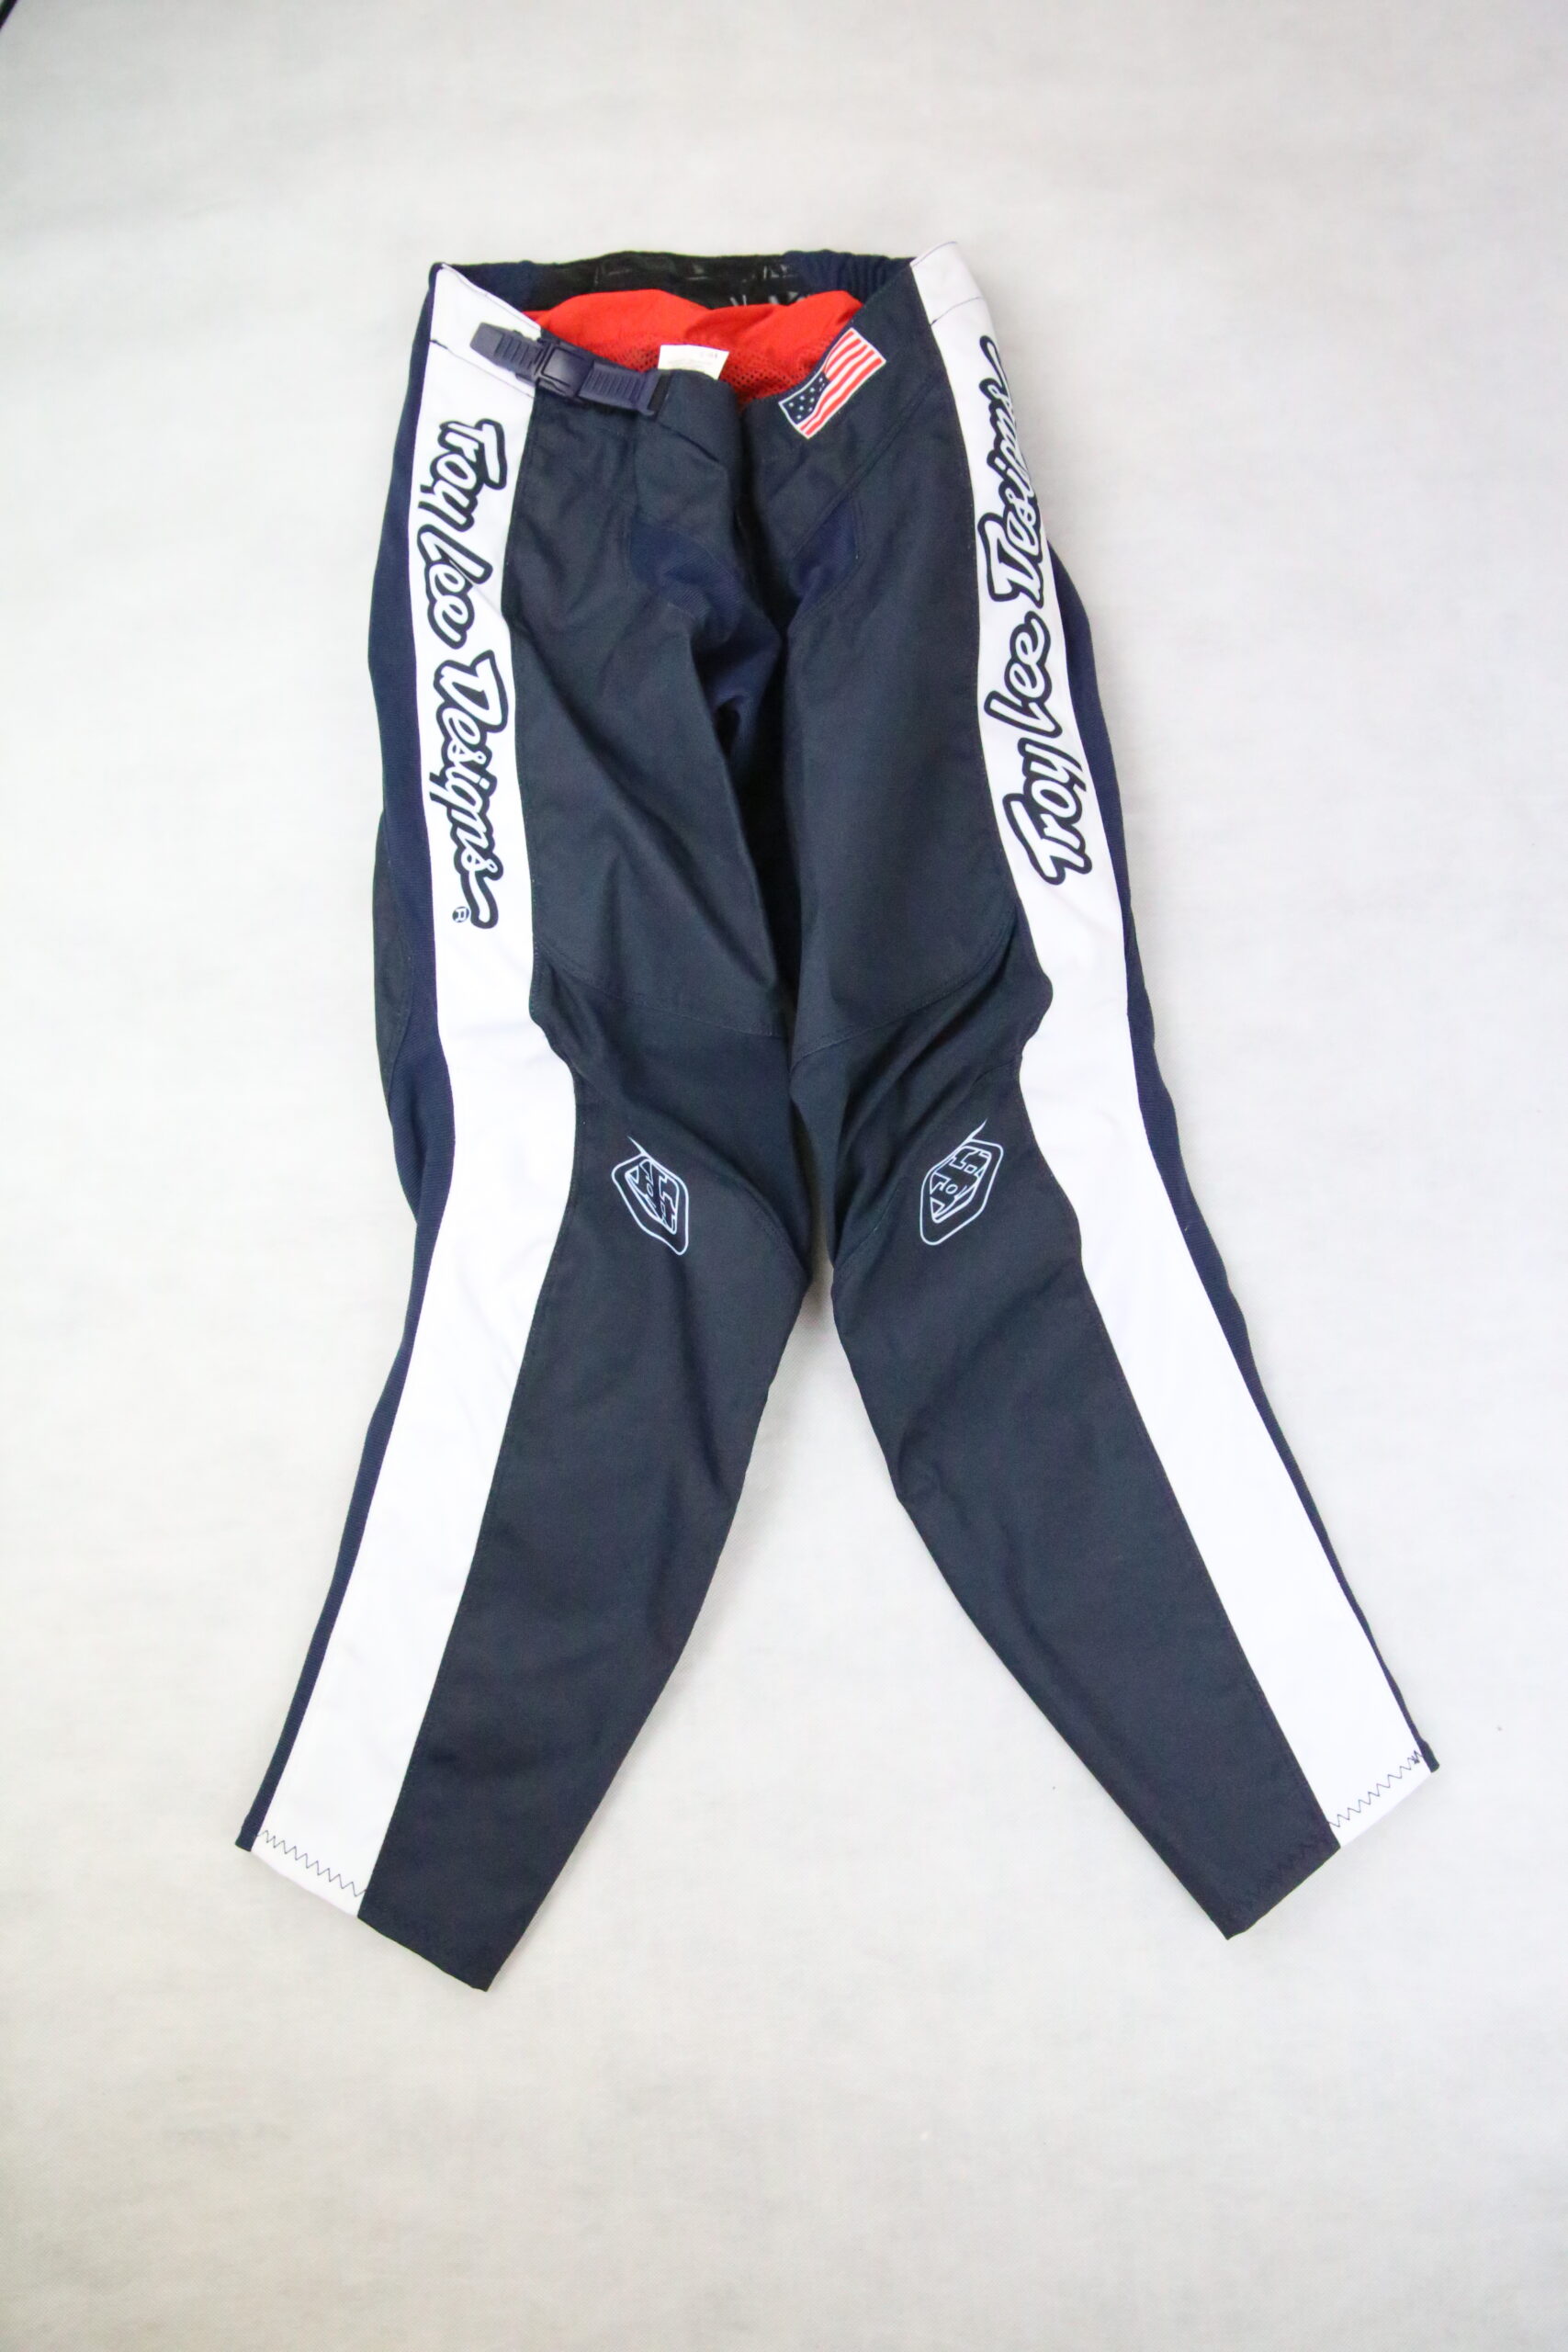 Troy Lee Designs TLD GP Liberty Motocross Pants - Size 29 - NEW